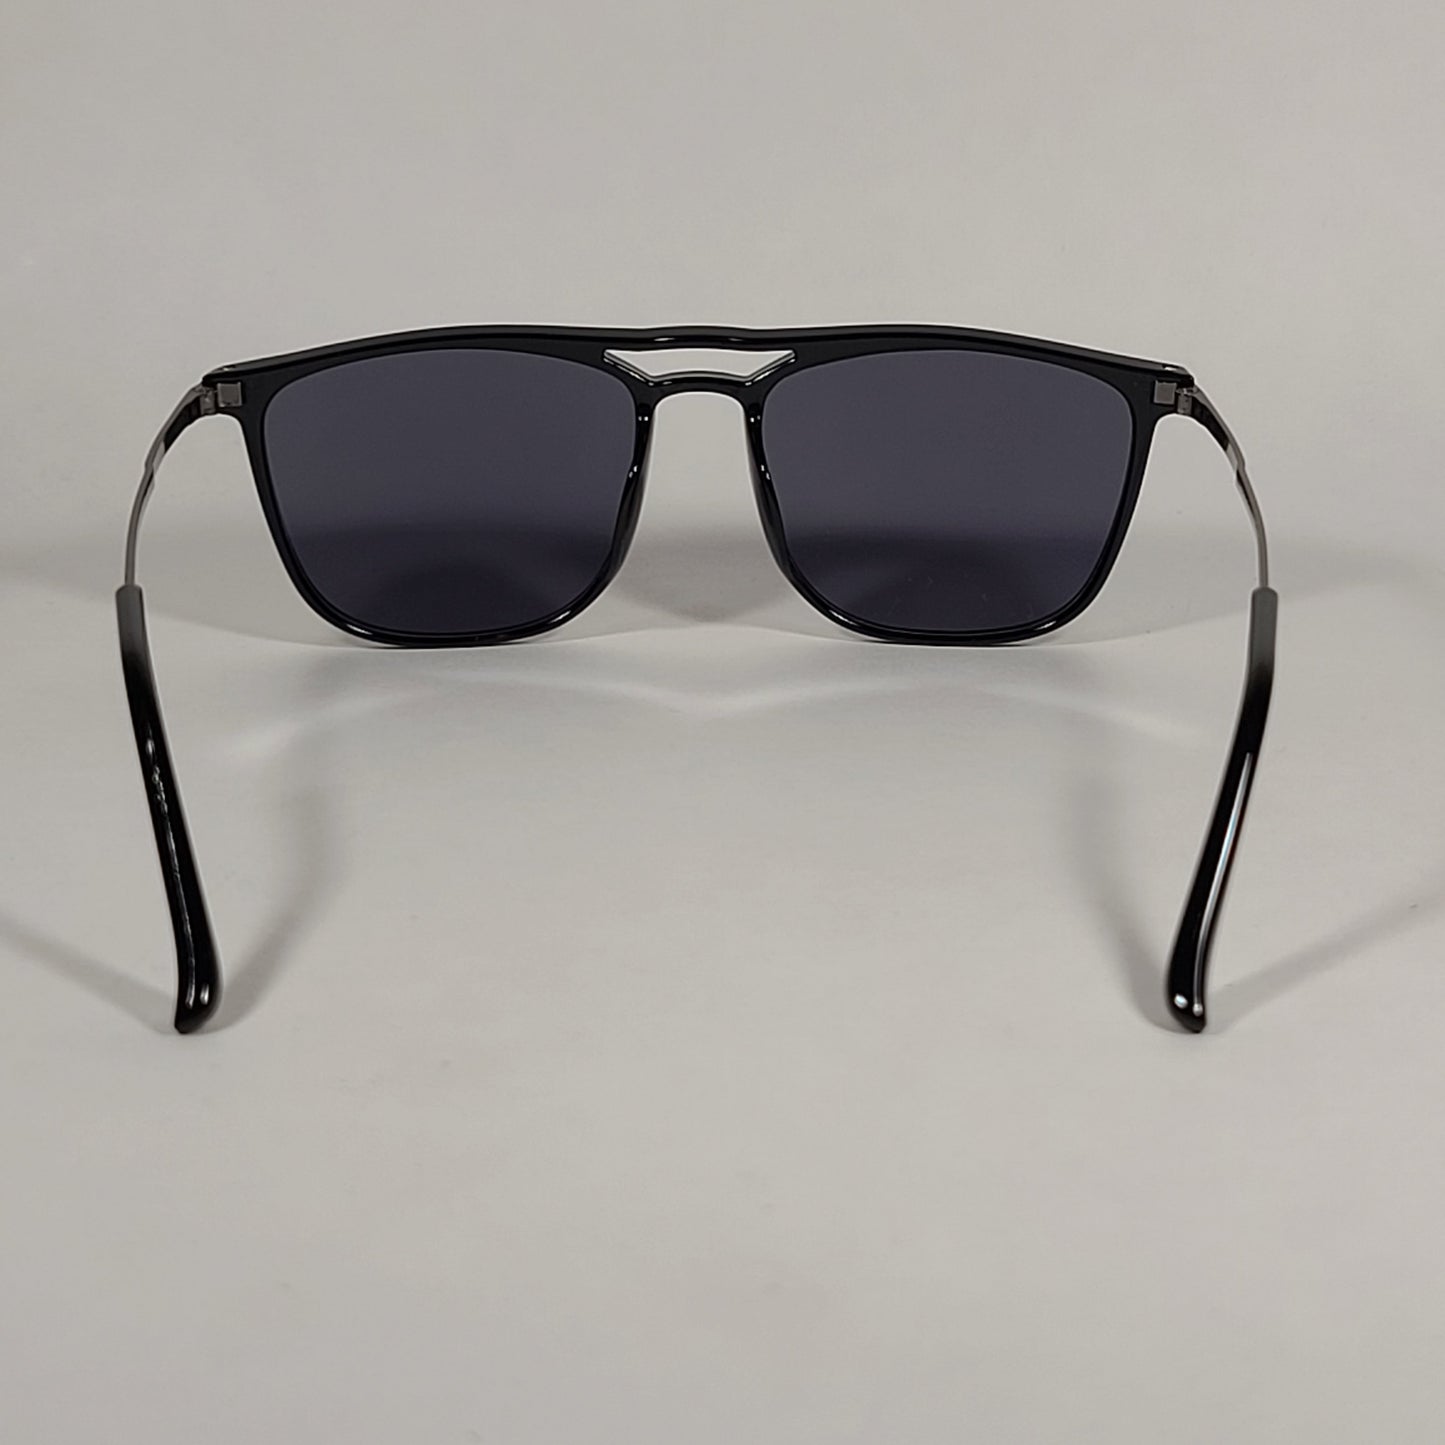 Vince Camuto Rectangle Sunglasses Black And Gunmetal Frame Gray Tinted Lens VM620 OX - Sunglasses